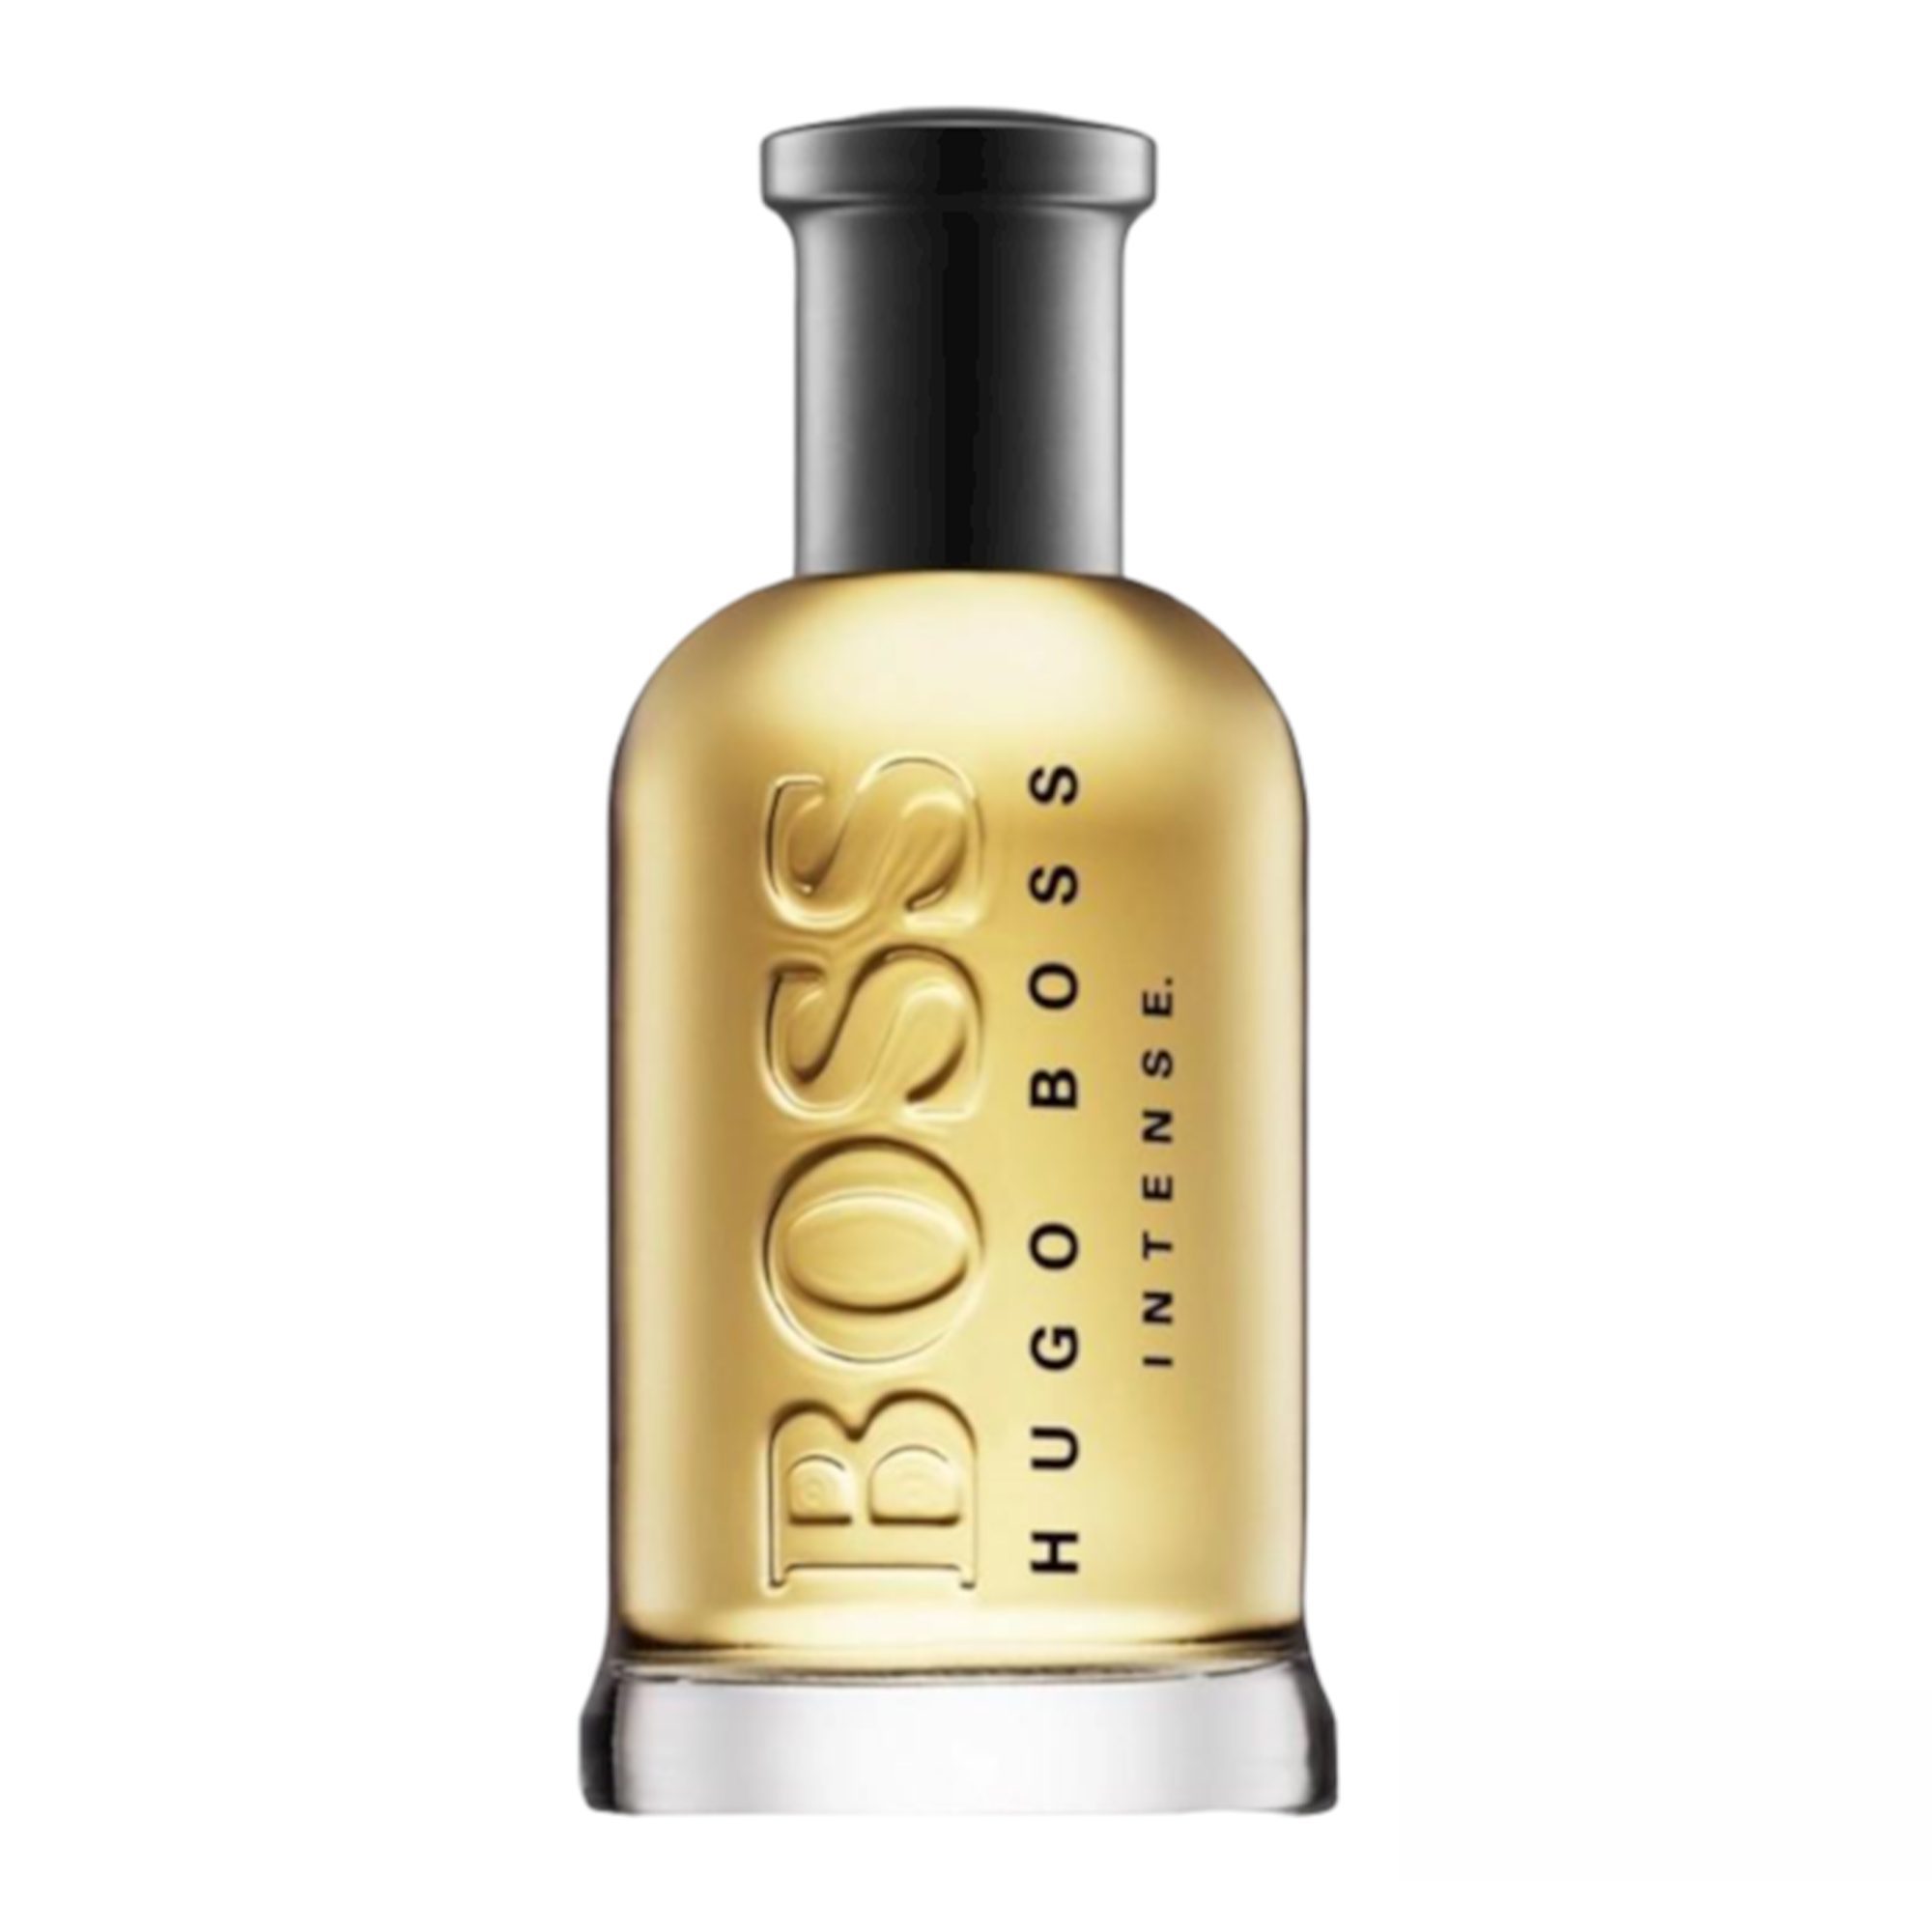 Туалетная вода хуго босс цена. Hugo Boss Boss Bottled, 100 ml. Hugo Boss Boss Bottled 6. Hugo Boss Boss Bottled № 6 EDT, 100 ml. Hugo Boss Bottled 6 мужские.